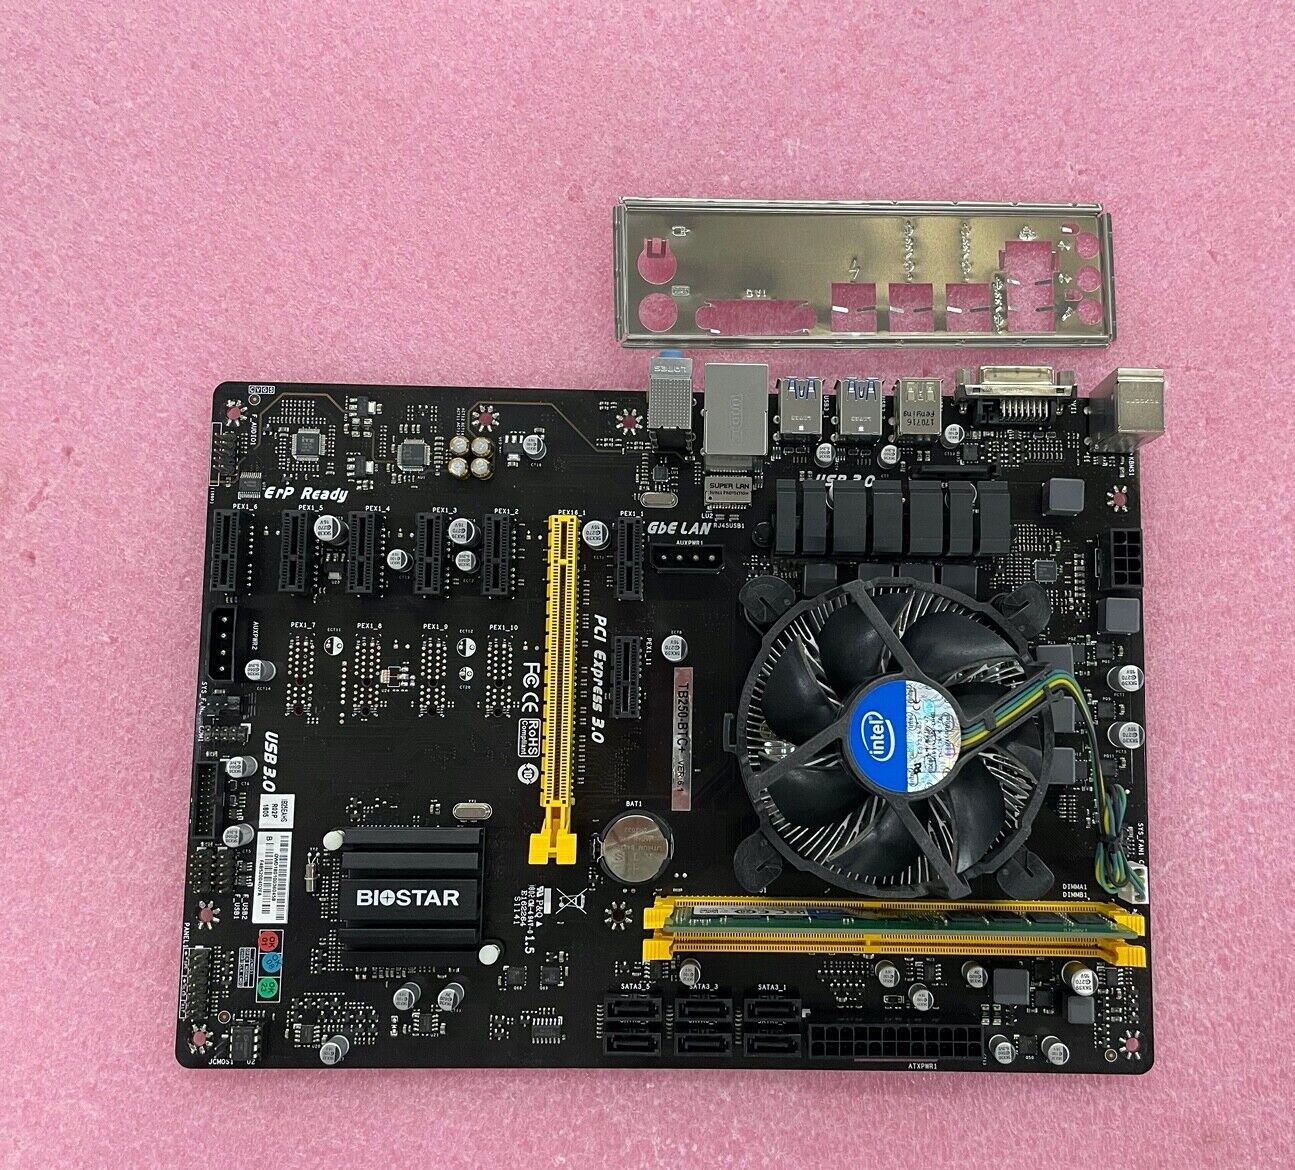 BIOSTAR TB250-BTC+ Motherboard with Intel Pentium G4560/fan and 4GB DDR4